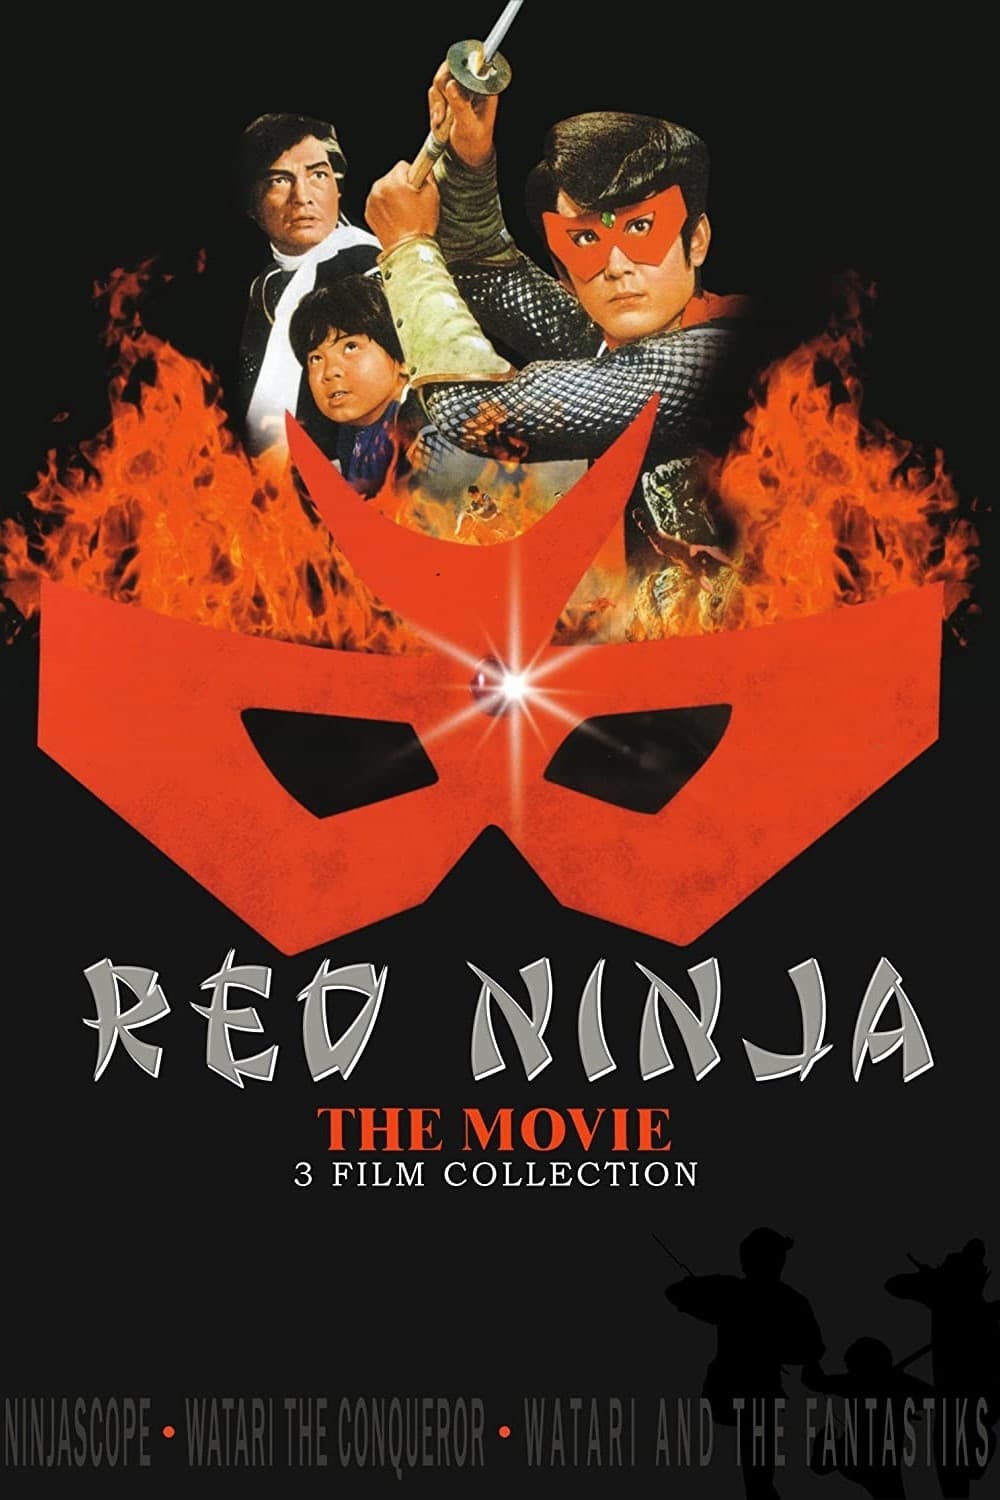 Ninjascope: The Magic World of Ninjas